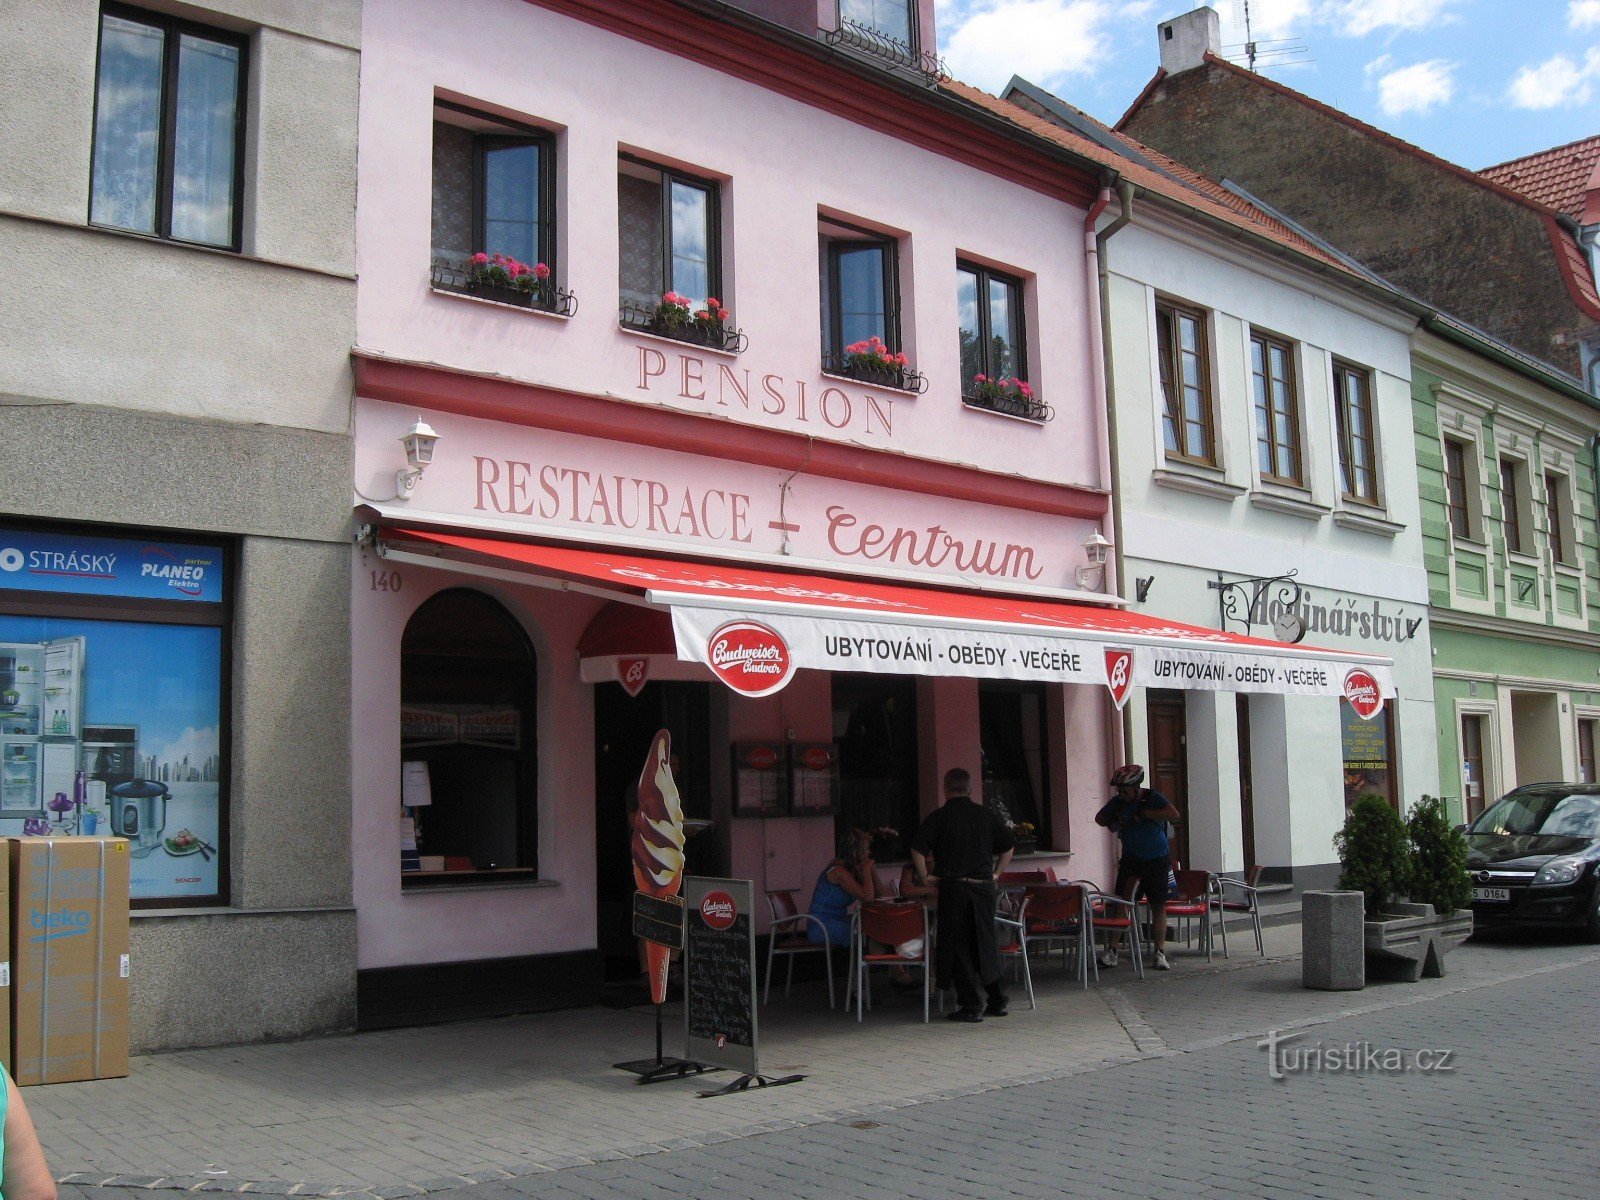 Trhové Sviny - εστιατόριο και πανσιόν